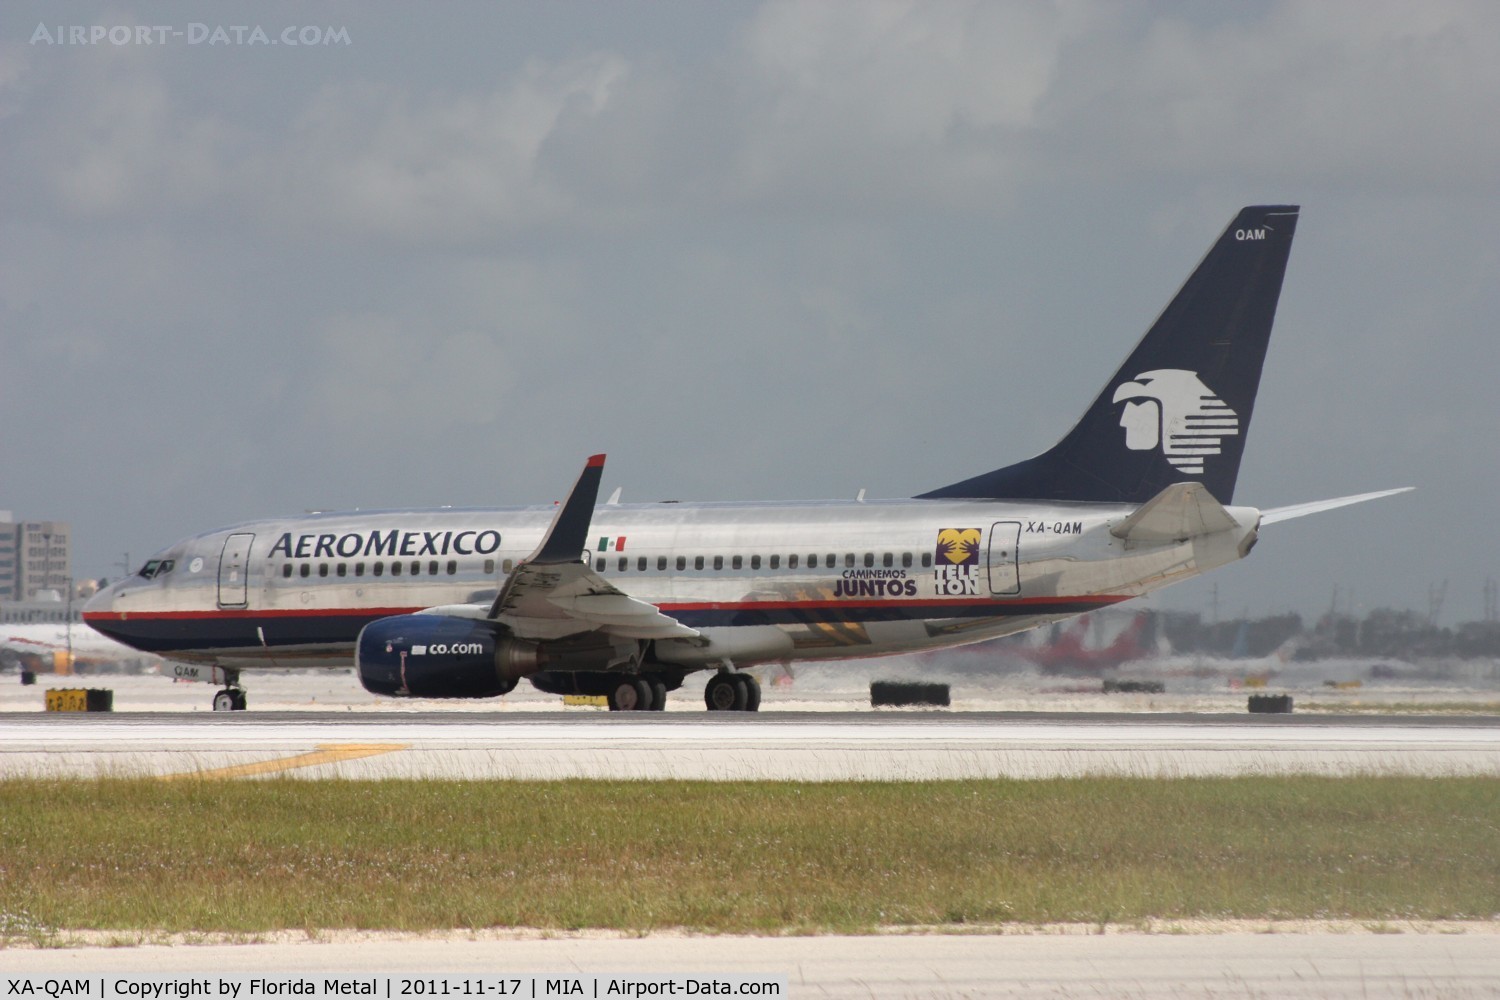 XA-QAM, 2005 Boeing 737-752 C/N 34294, Aeromexico 737 with Teleton logo on back just landed on Runway 30 near the photo holes